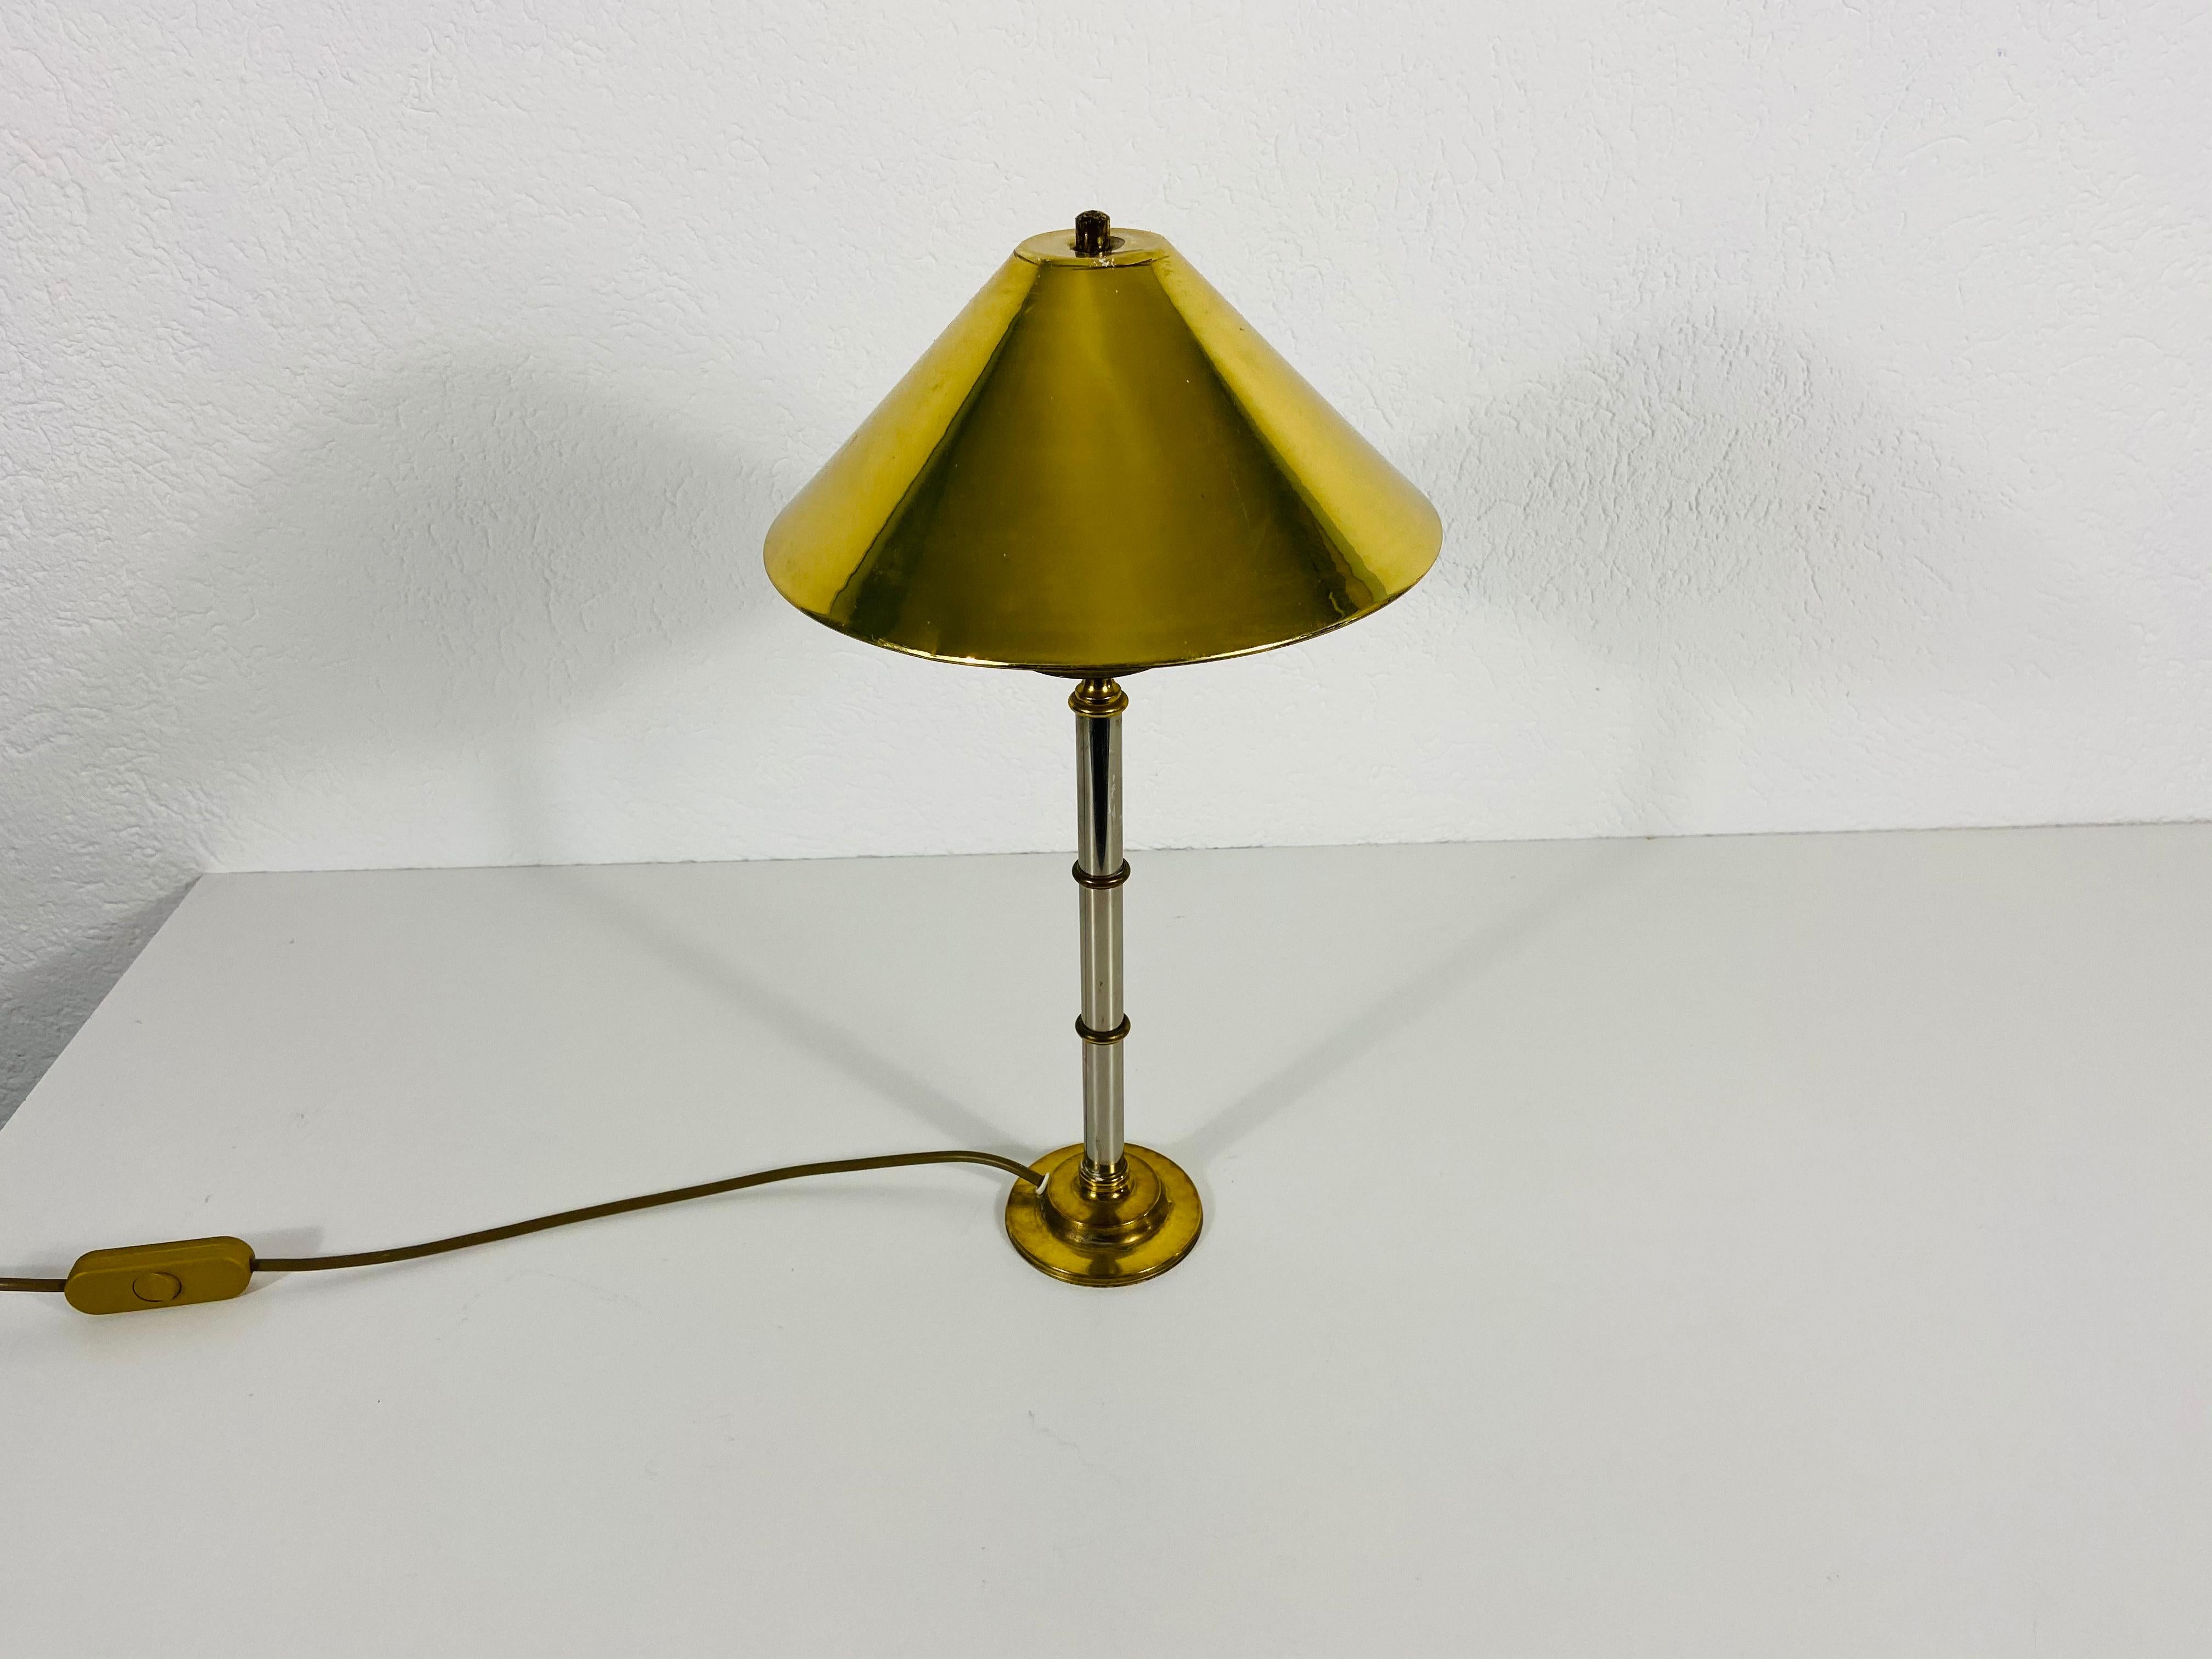 German Midcentury Solid Brass Table Lamp by Vereinigte Werkstätte, 1960s For Sale 2